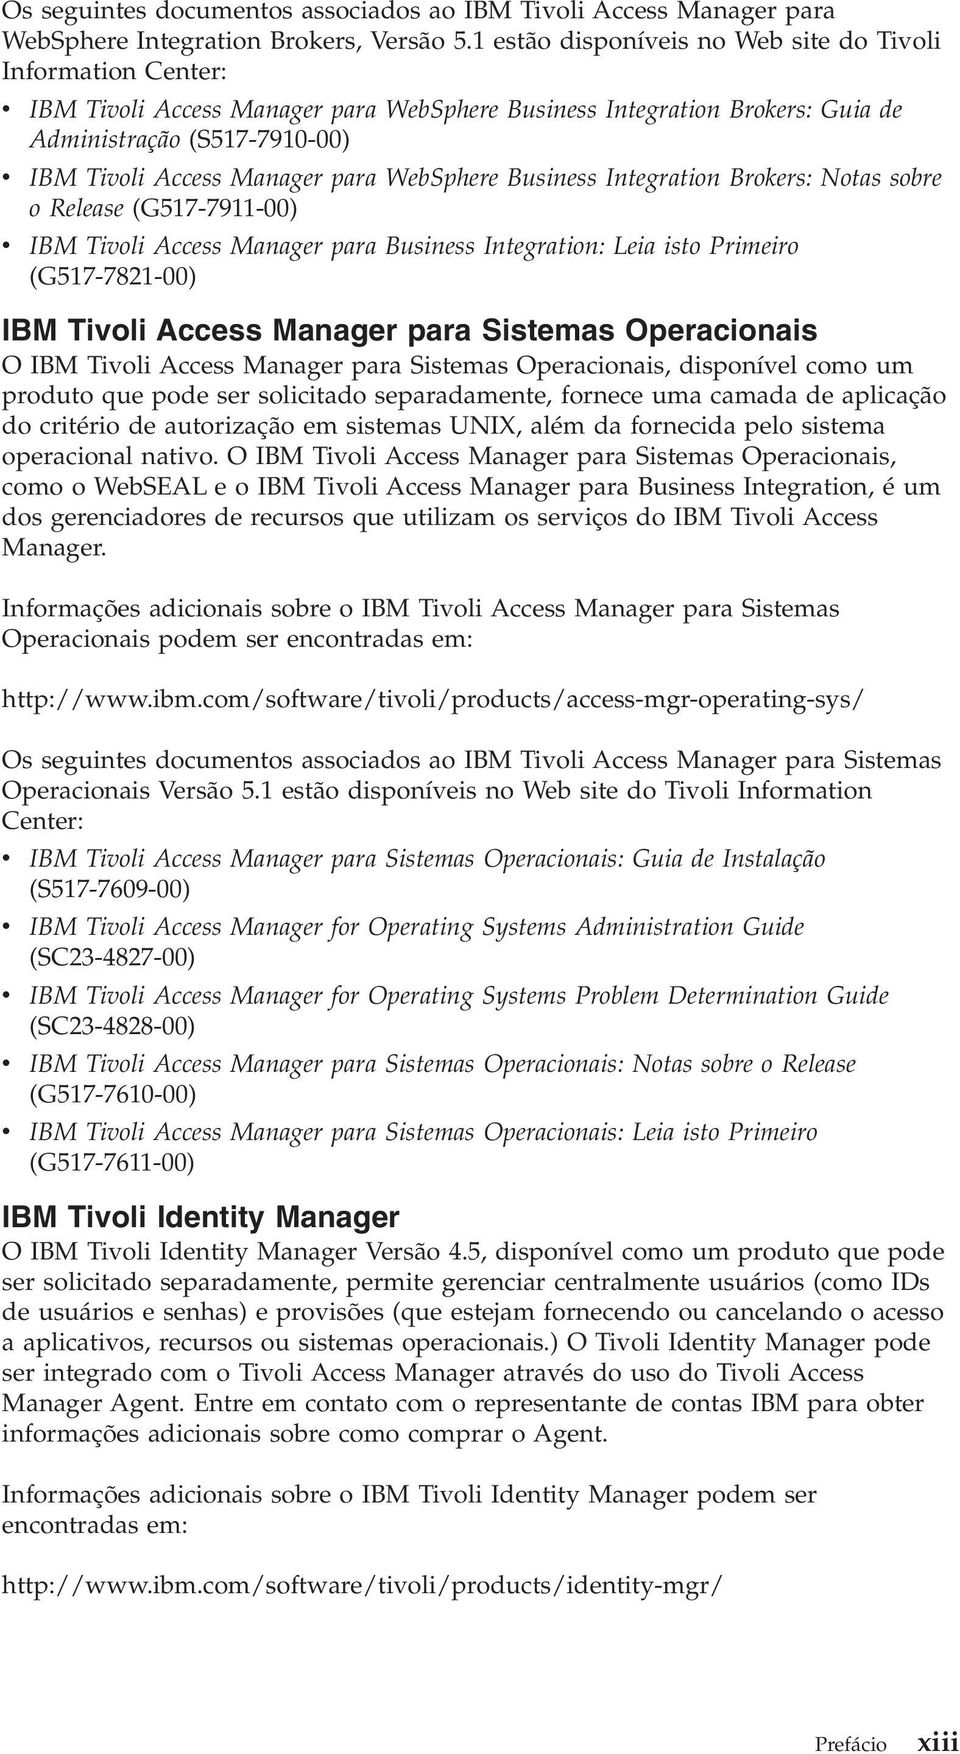 WebSphere Business Integration Brokers: Notas sobre o Release (G517-7911-00) IBM Tioli Access Manager para Business Integration: Leia isto Primeiro (G517-7821-00) IBM Tioli Access Manager para